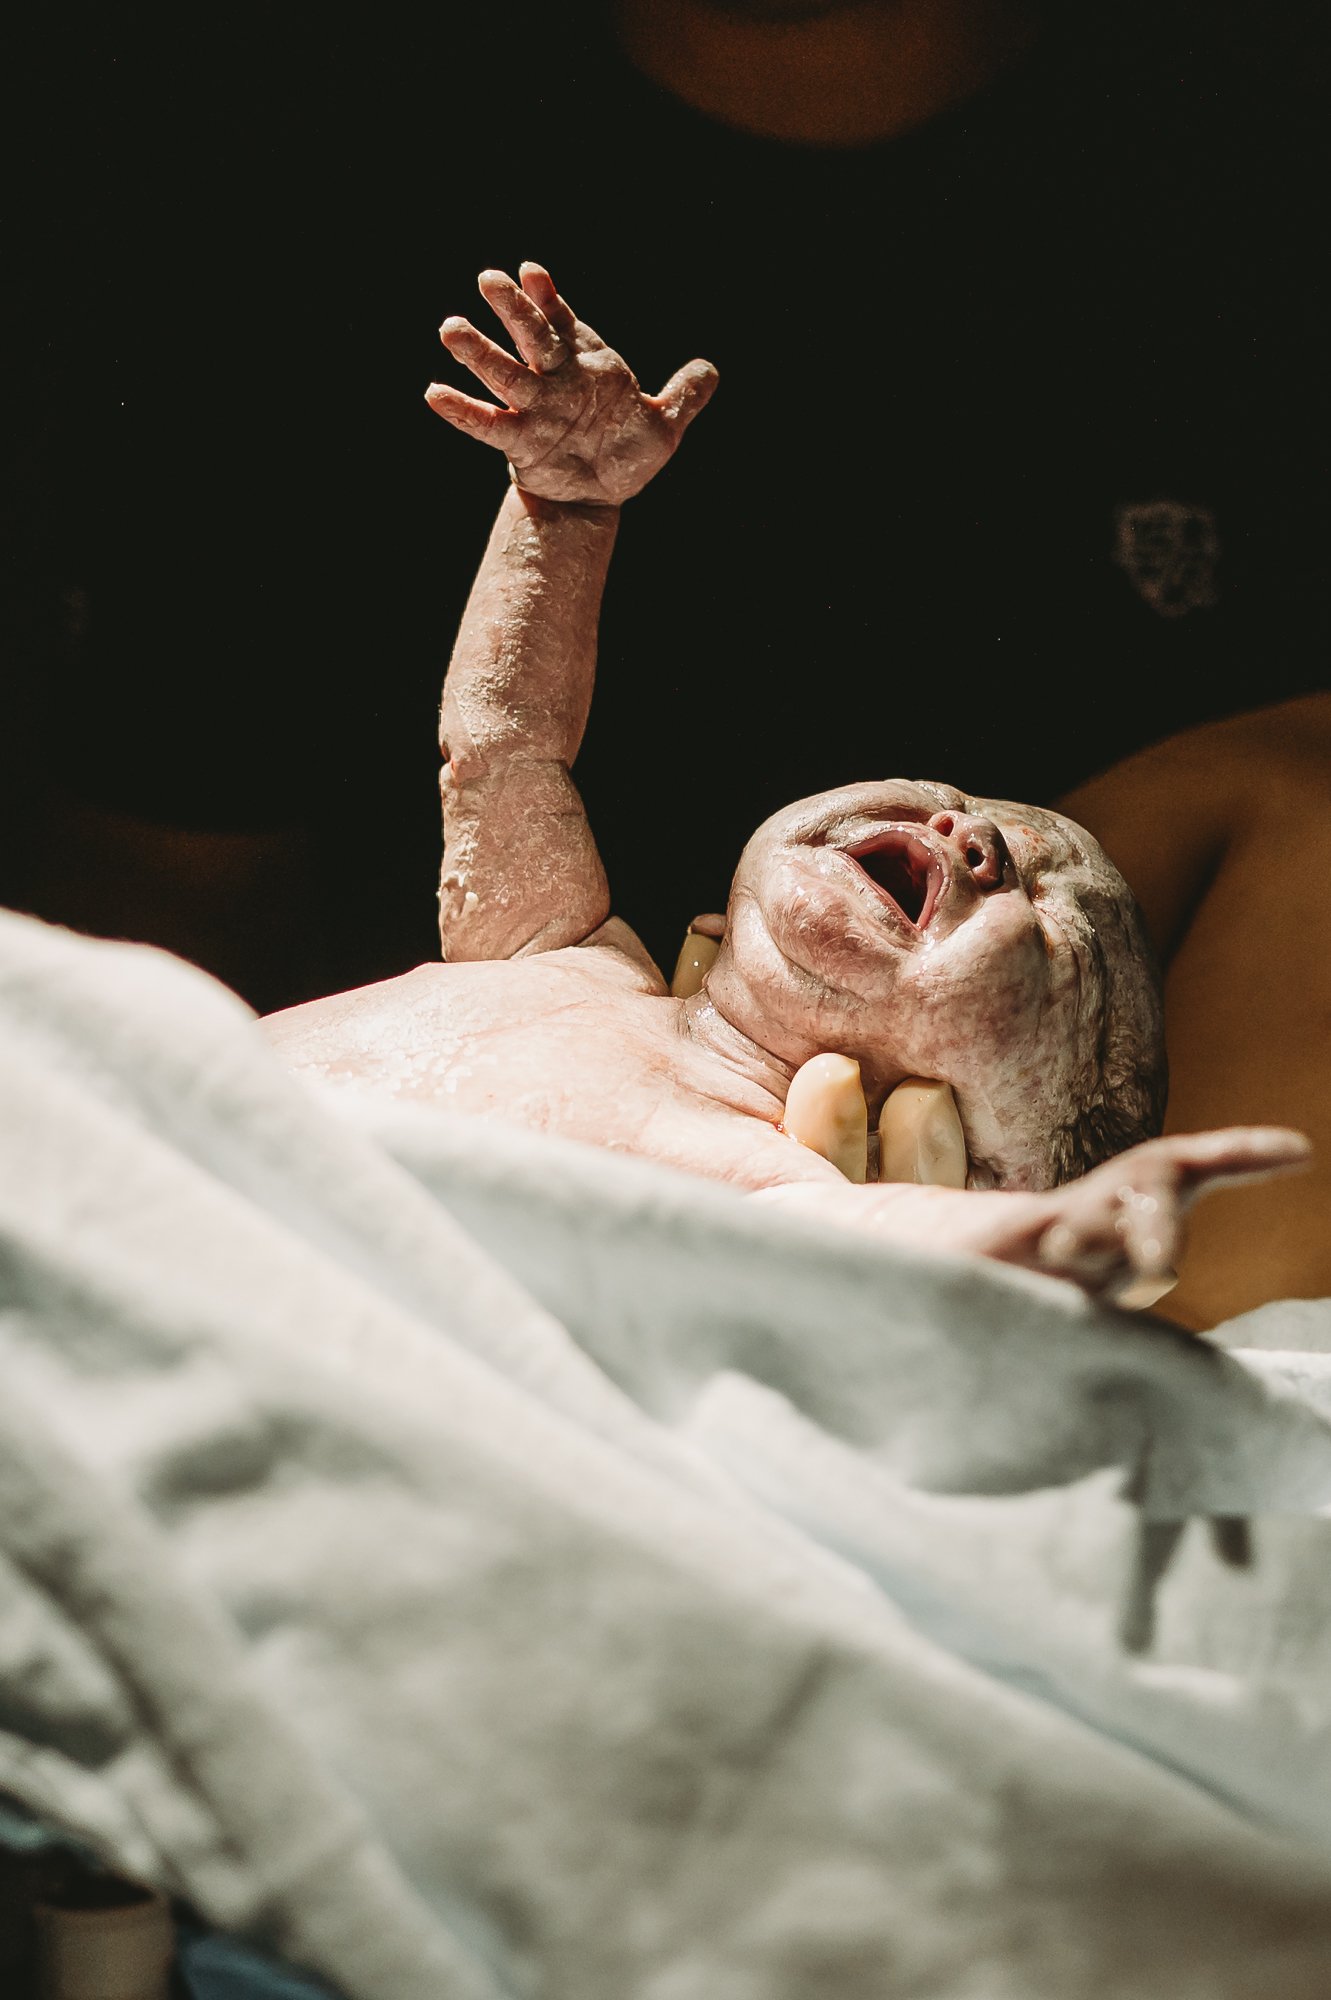 Hospital-birth-photography-kapiolani-honolulu-oahu-birth-dr-foley-epidural-mom-labors-with-support-husband-sarah-elizabeth-photos-and-film-oahu-birth-photographer-5143.jpg